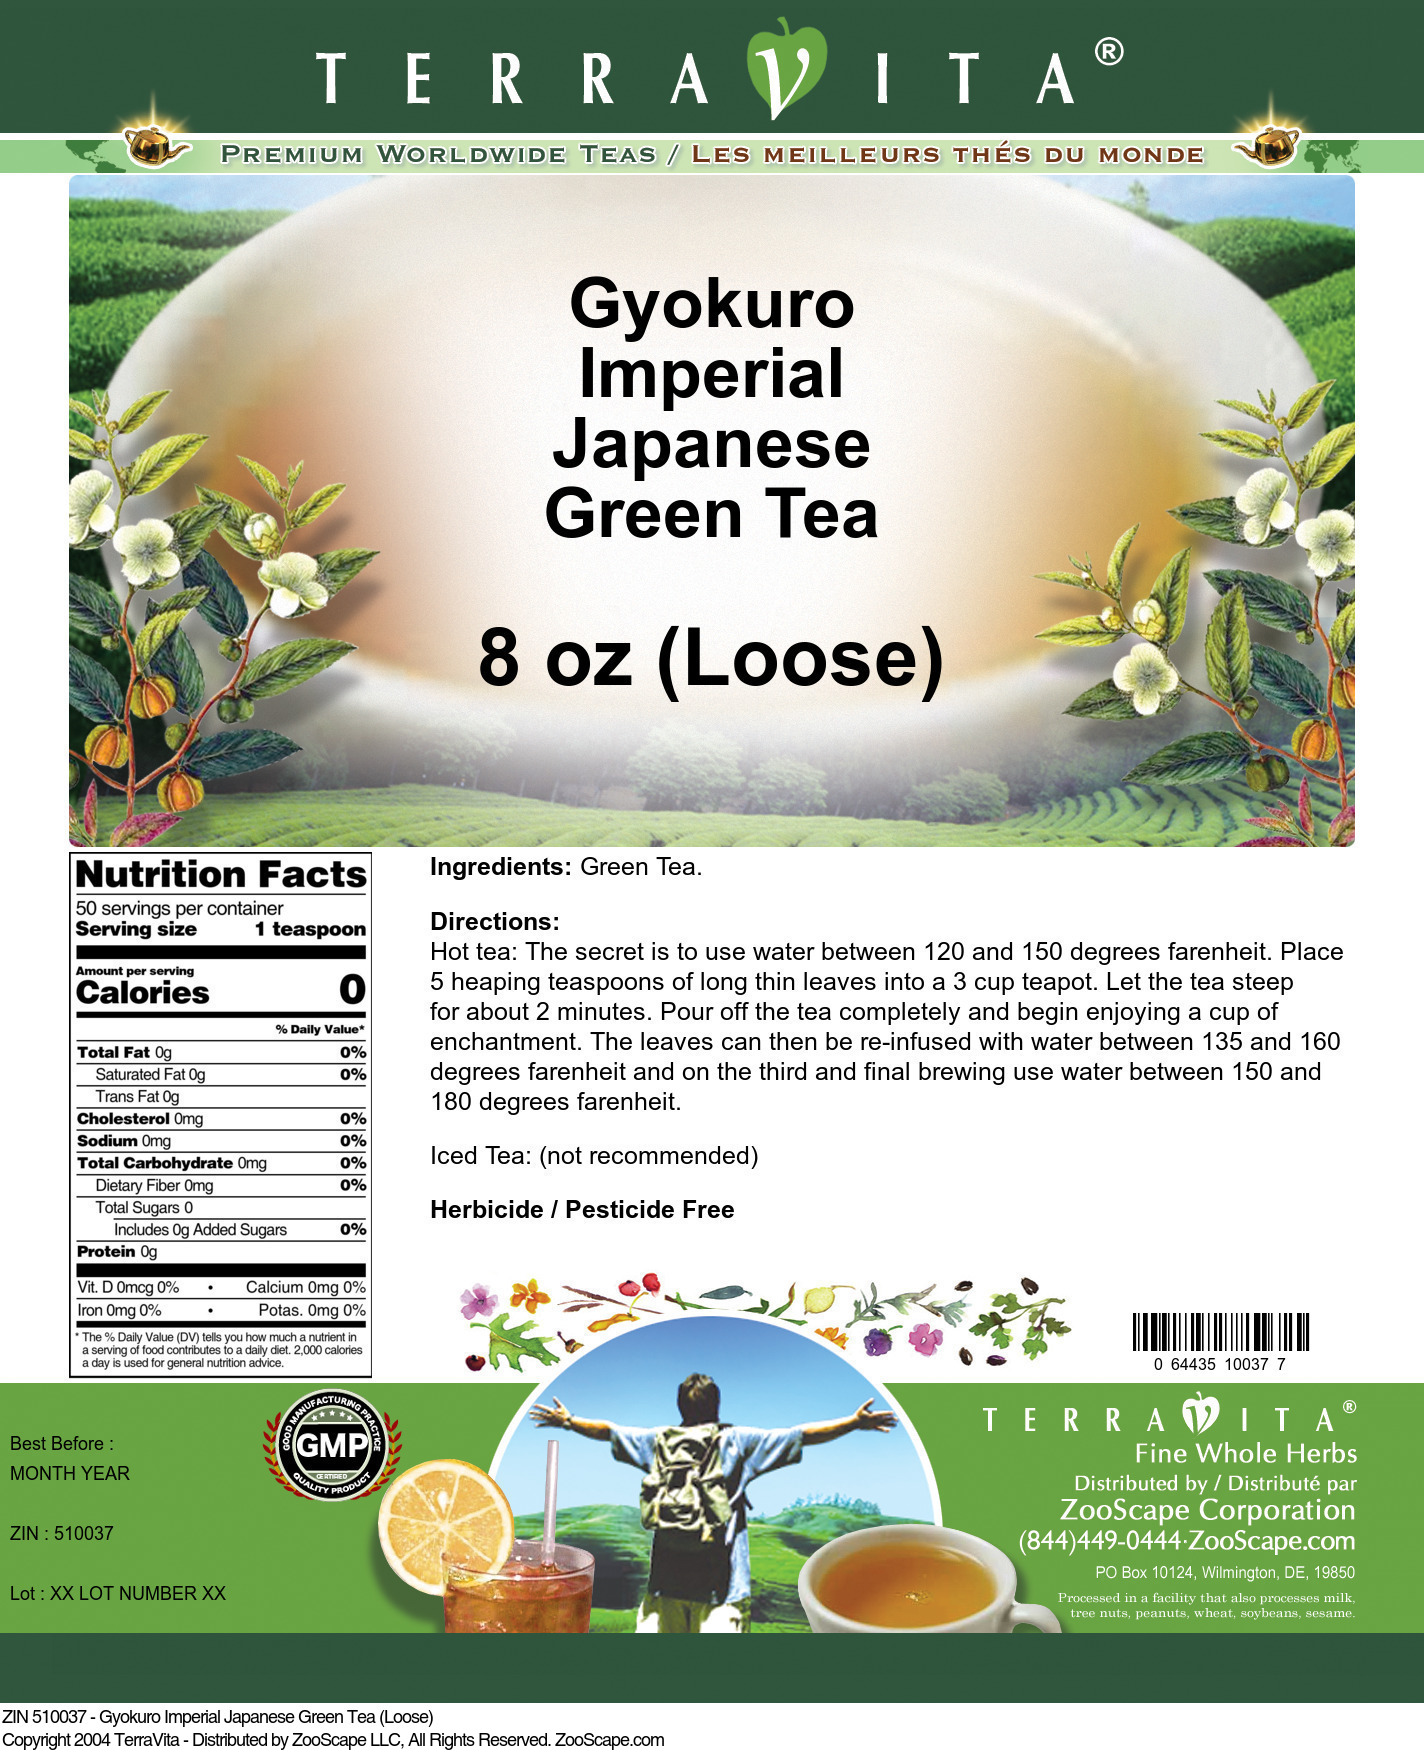 Gyokuro Imperial Japanese Green Tea (Loose) - Label